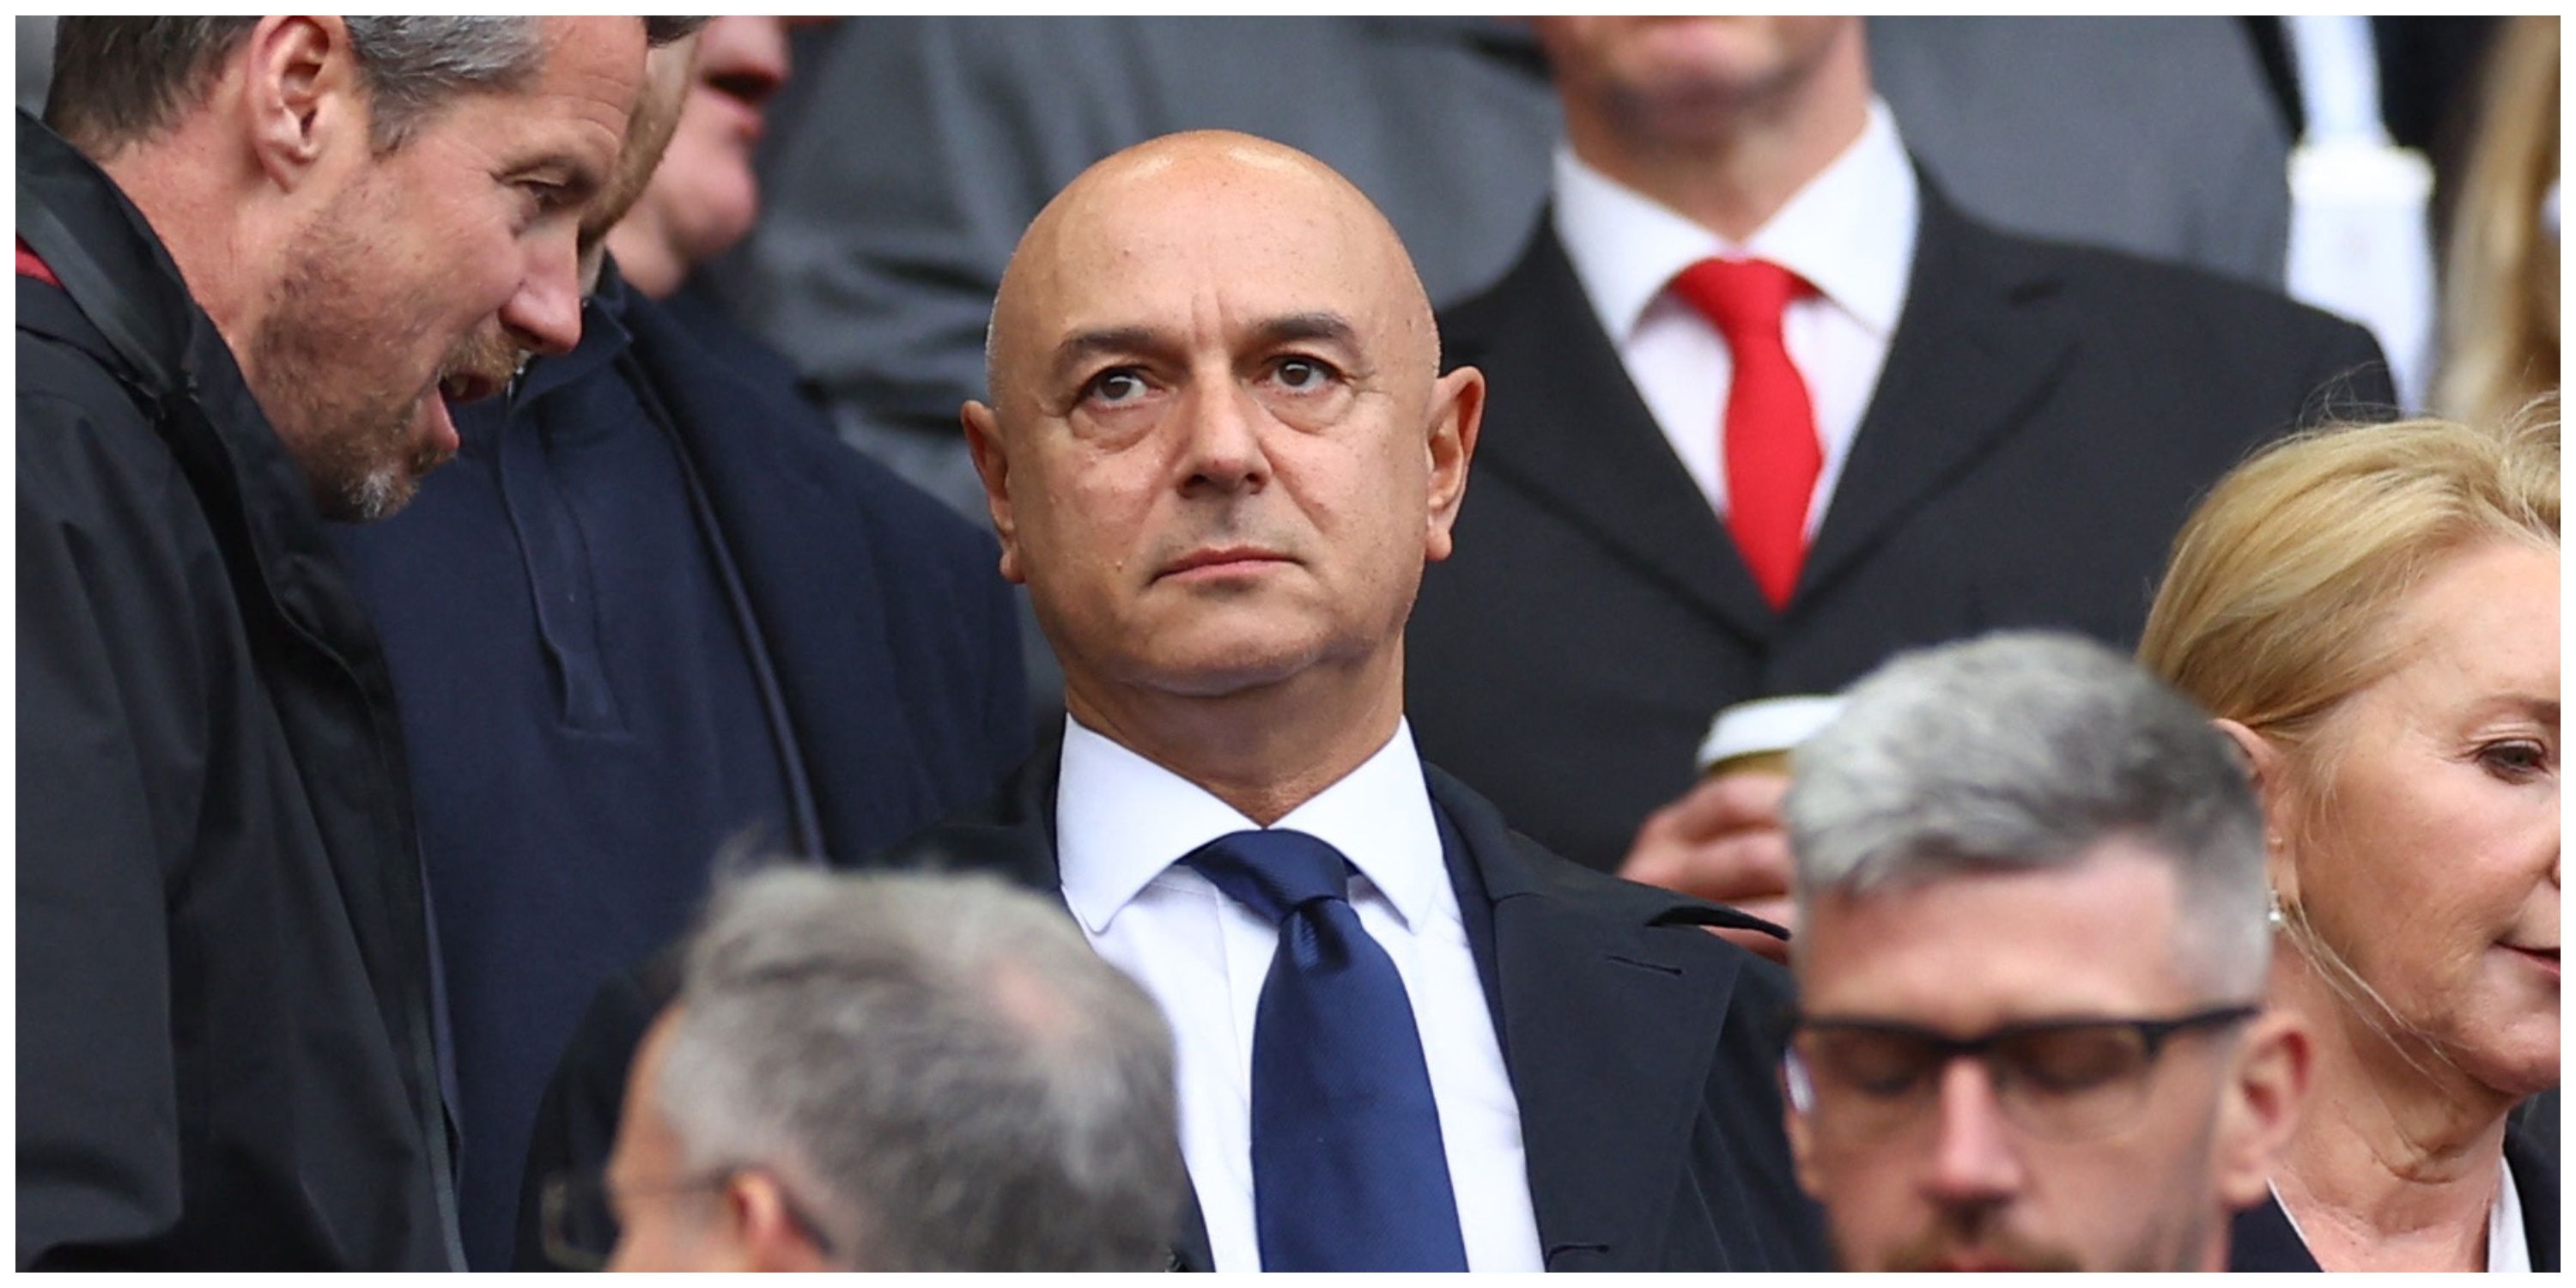 Tottenham chairman Daniel Levy at Liverpool game